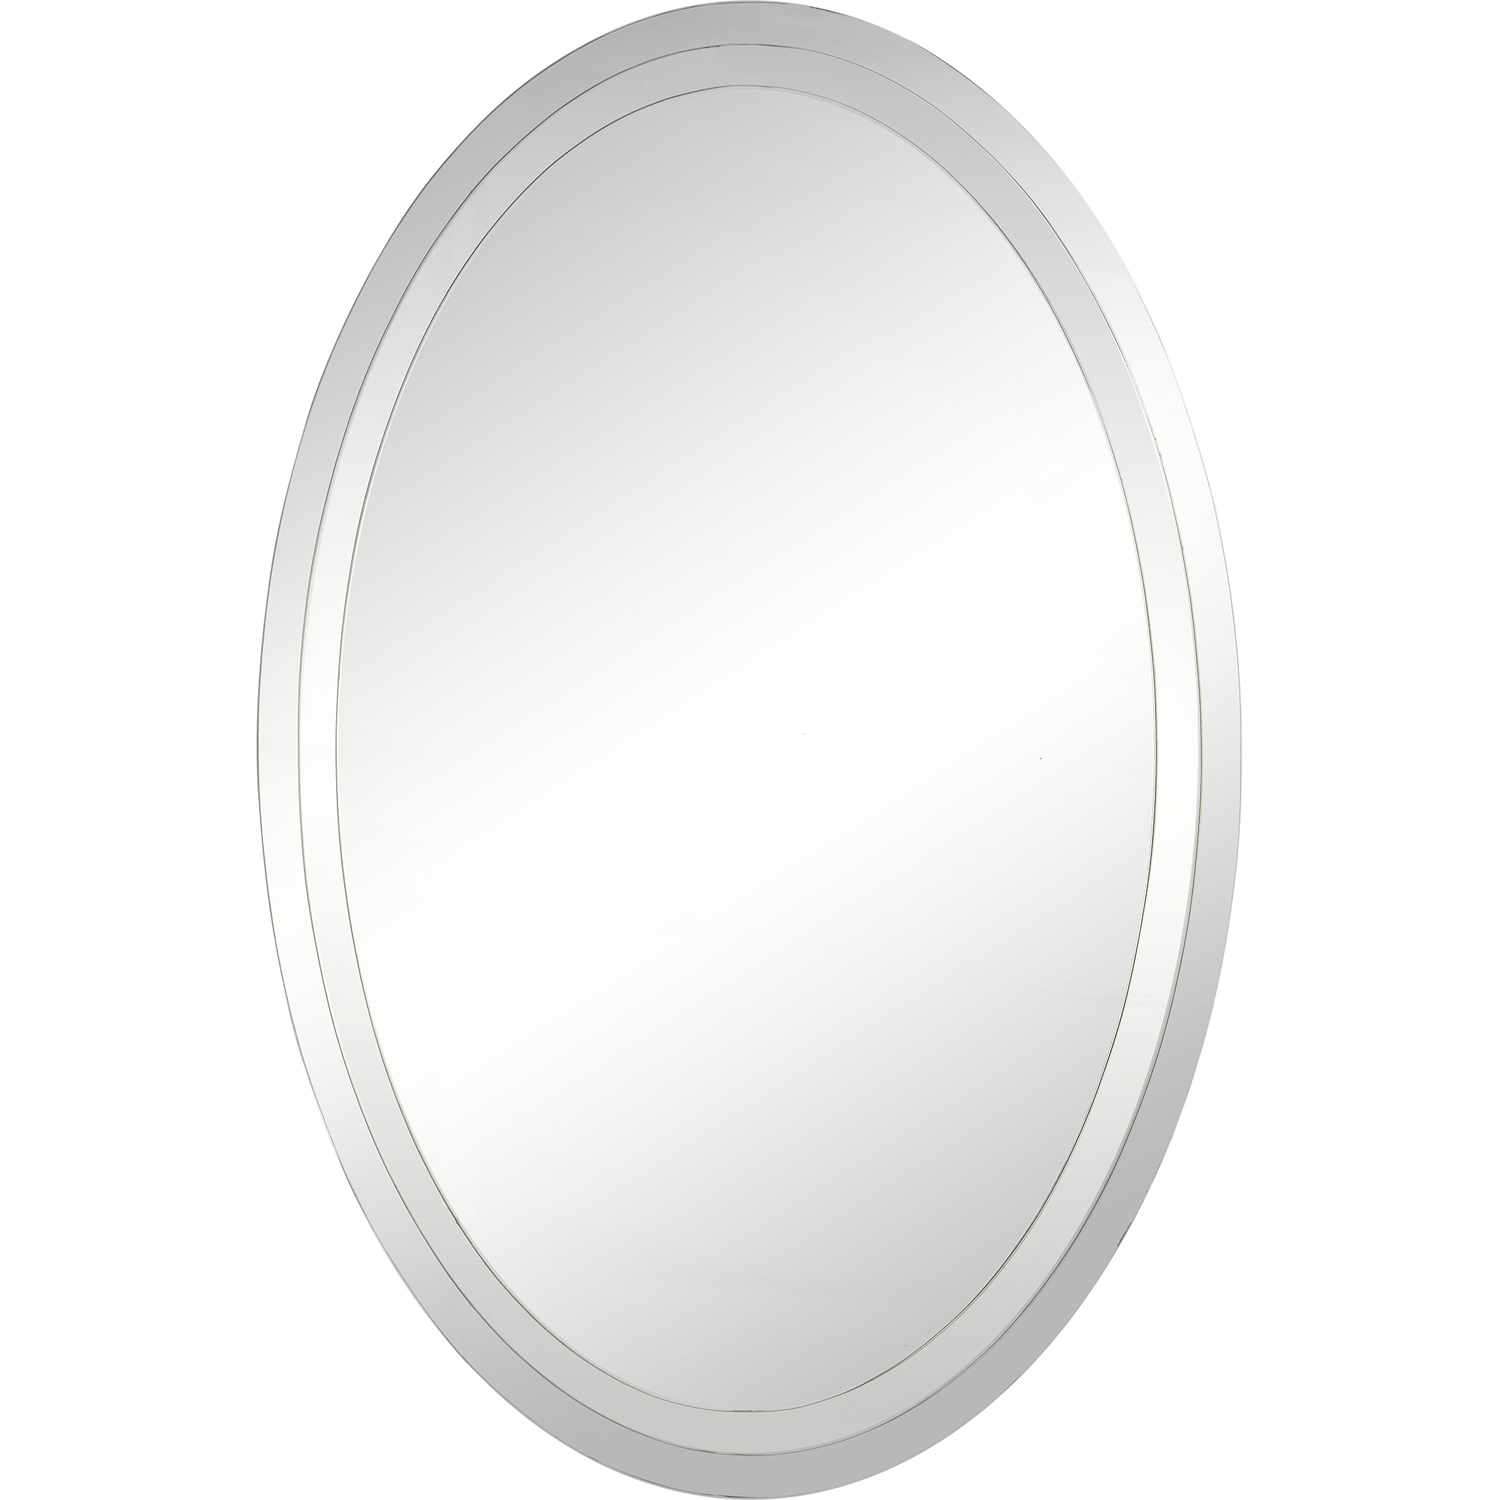 Ren-Wil Include Oval Mirror - Mirror